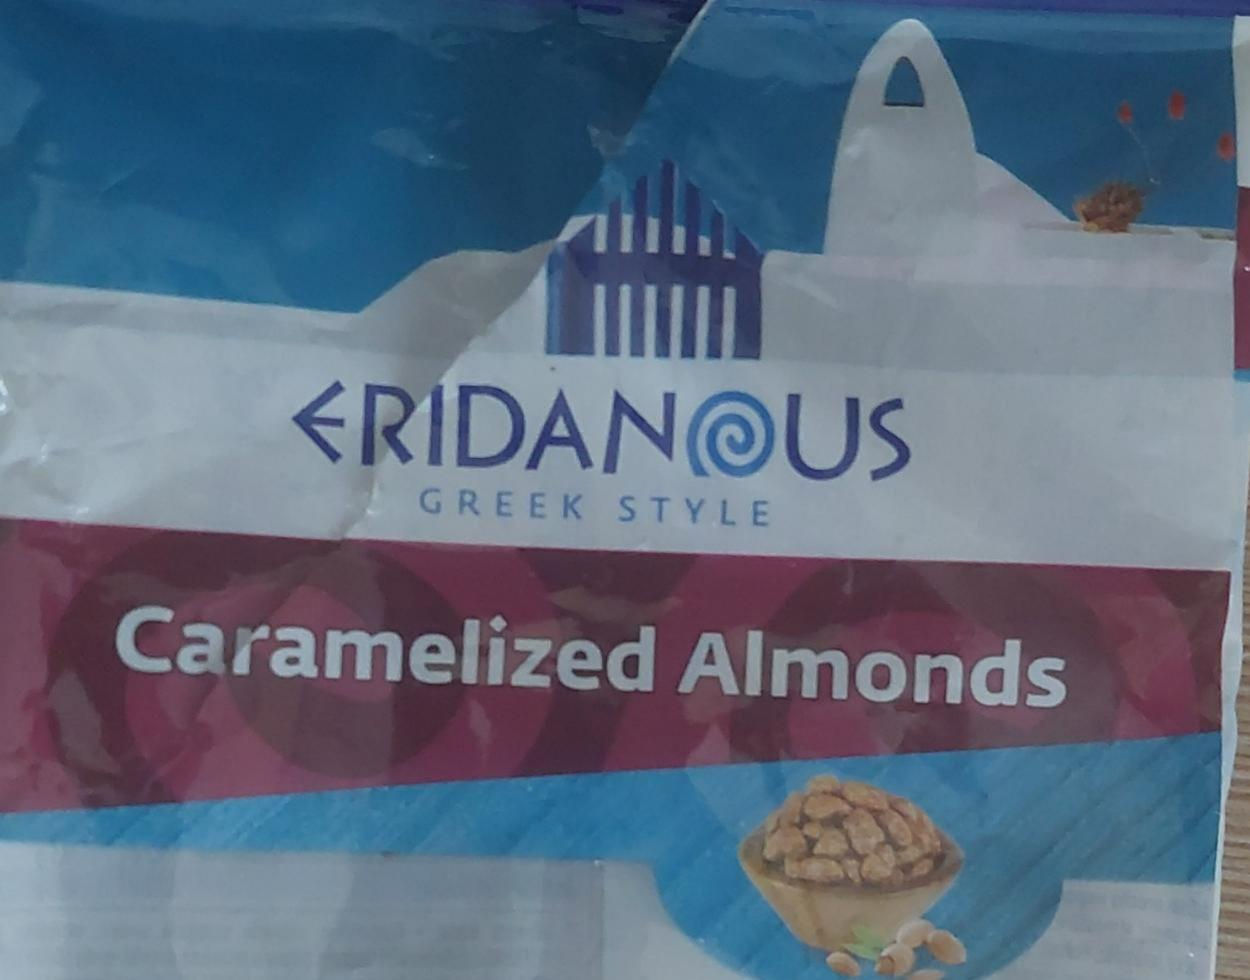 Fotografie - Caramelizex Almonds Eridanous